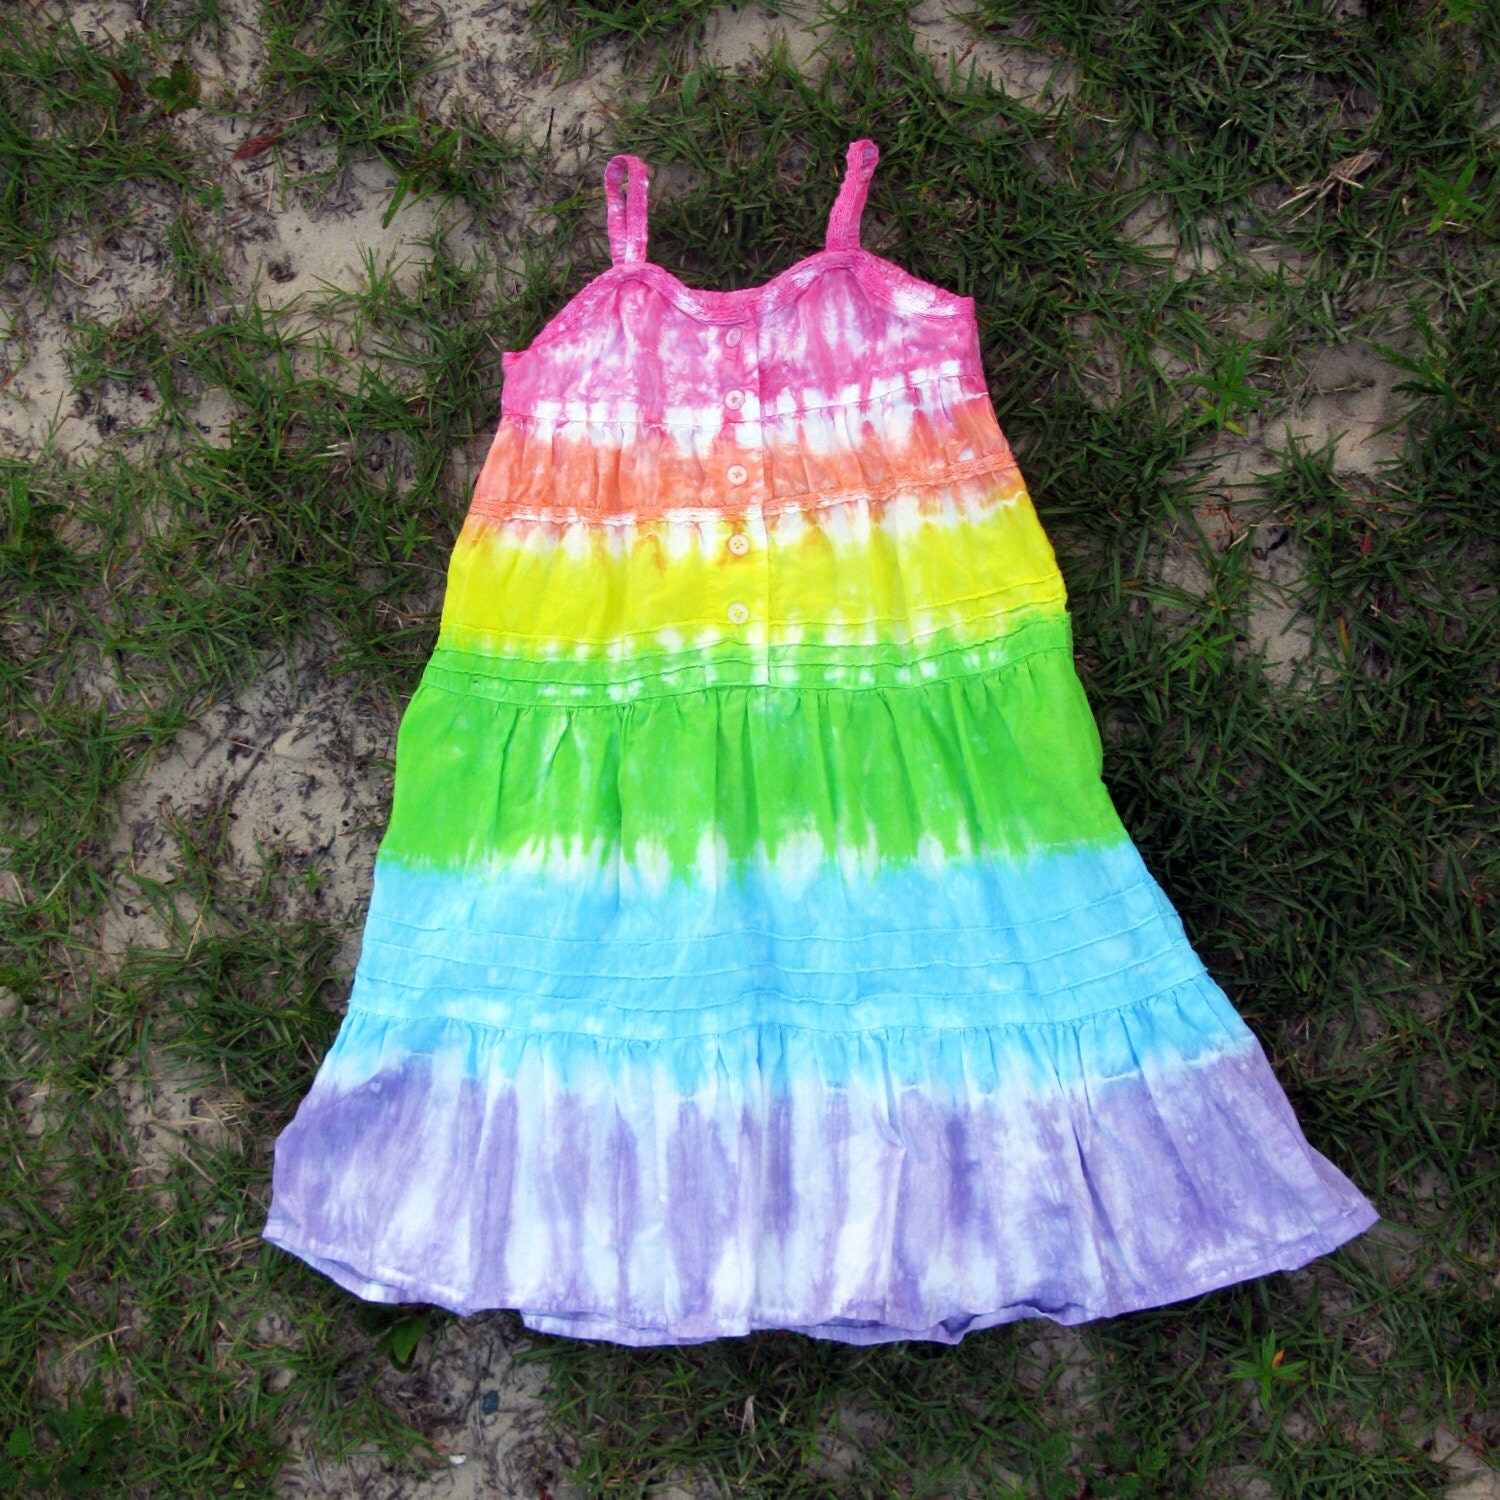 Girls sleeveless tie-dye pastel rainbow dress with lace